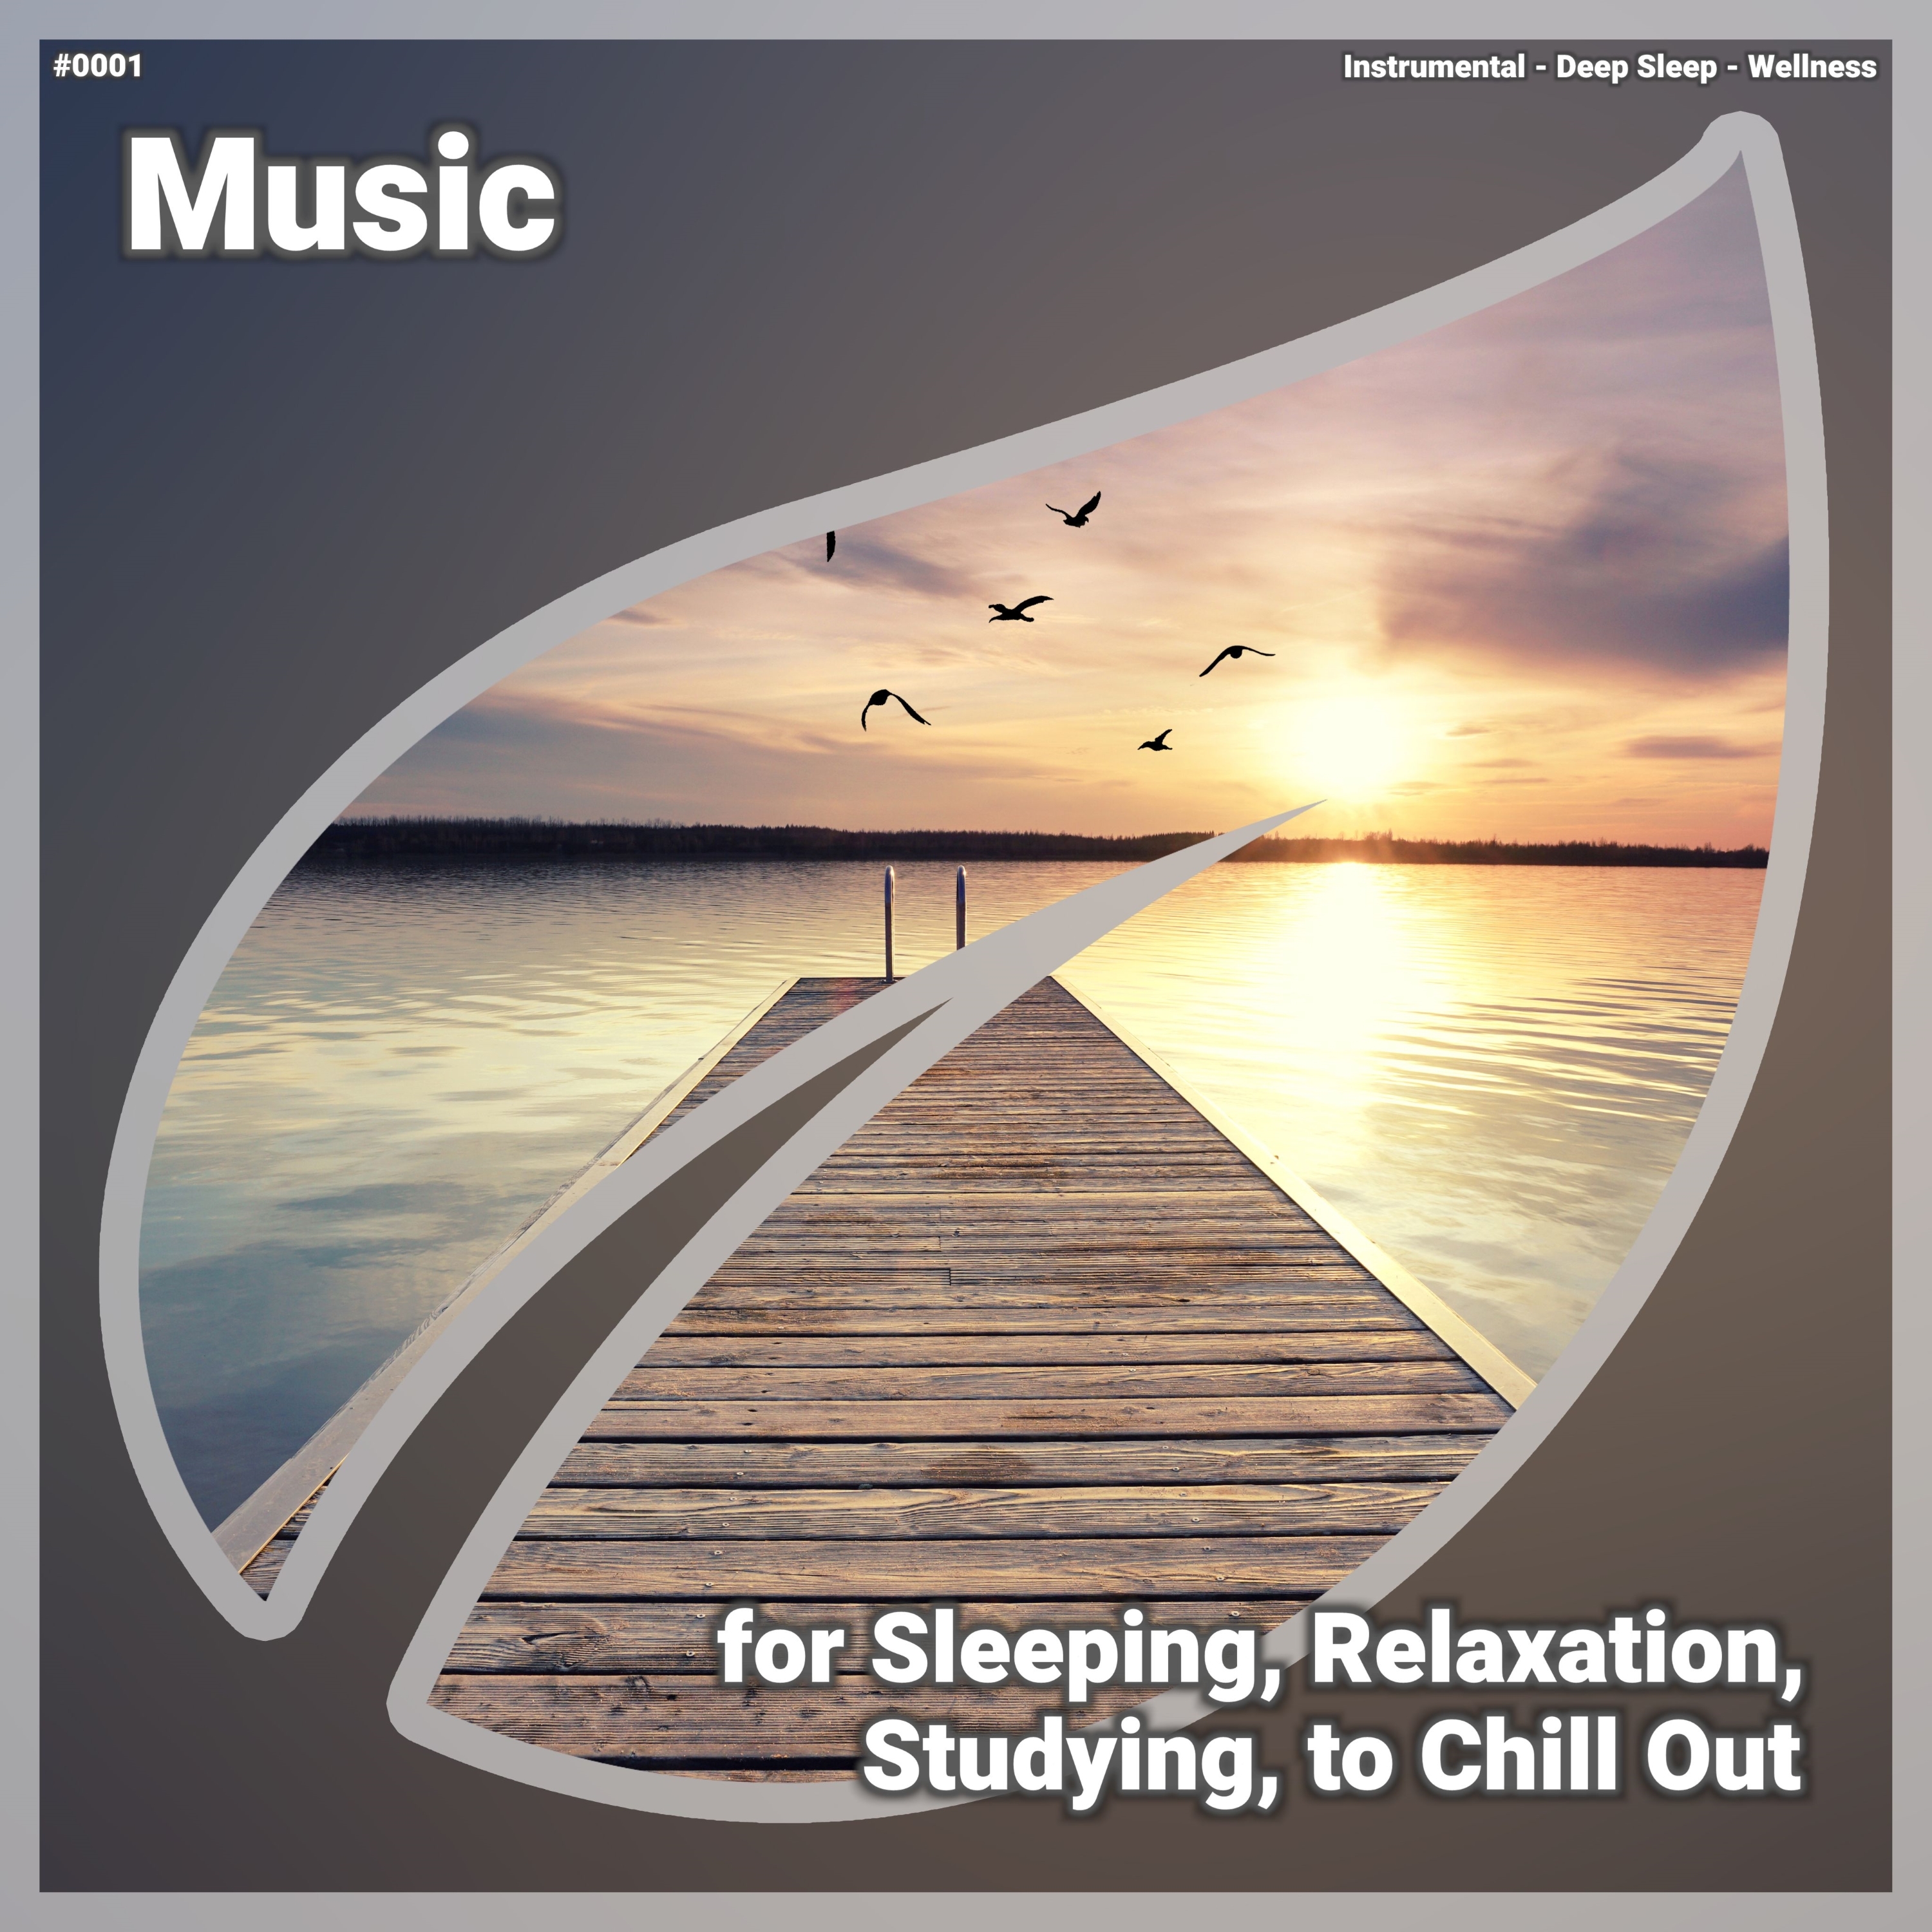 डाउनलोड करा Relaxing Music, Pt. 14